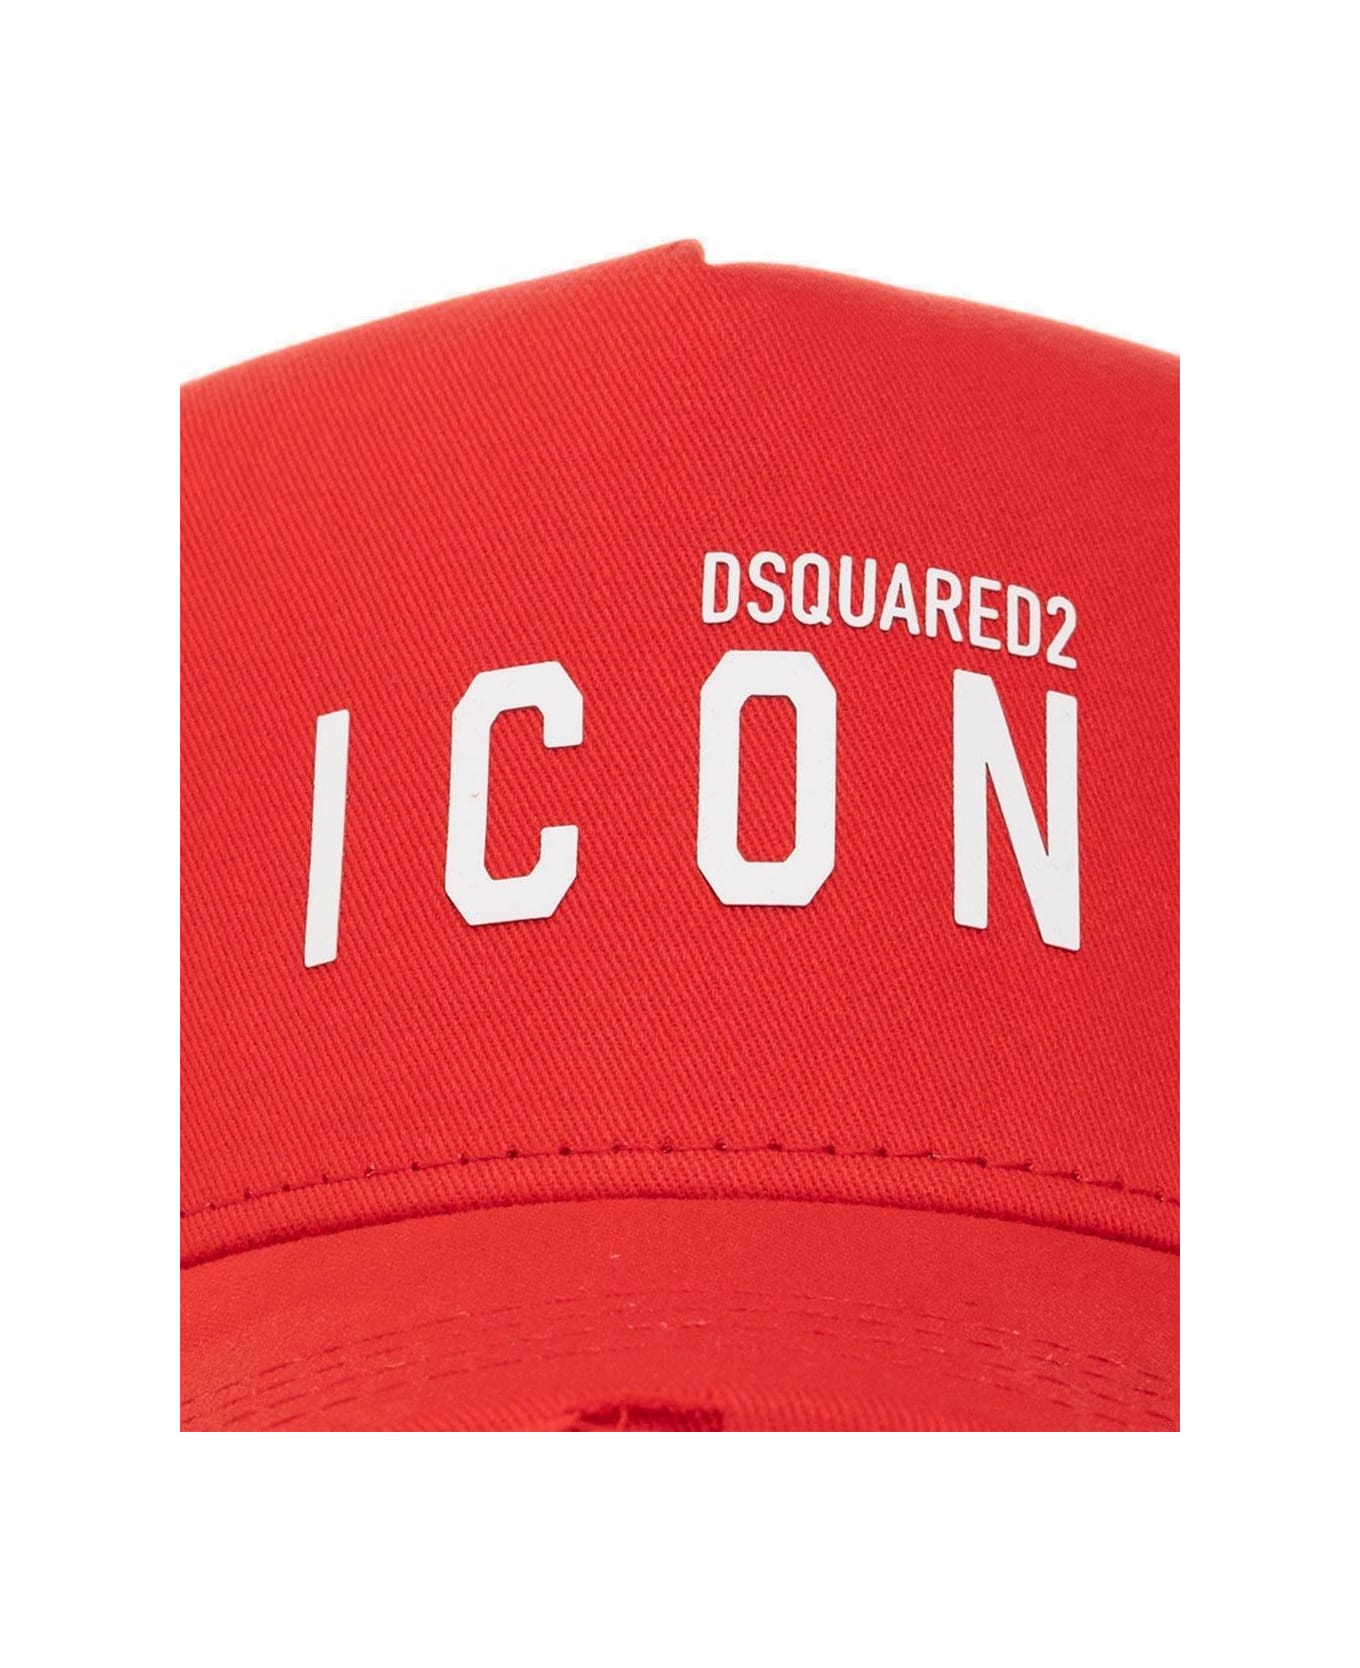 Dsquared2 Logo Printed Curved Peak Cap - Red 帽子